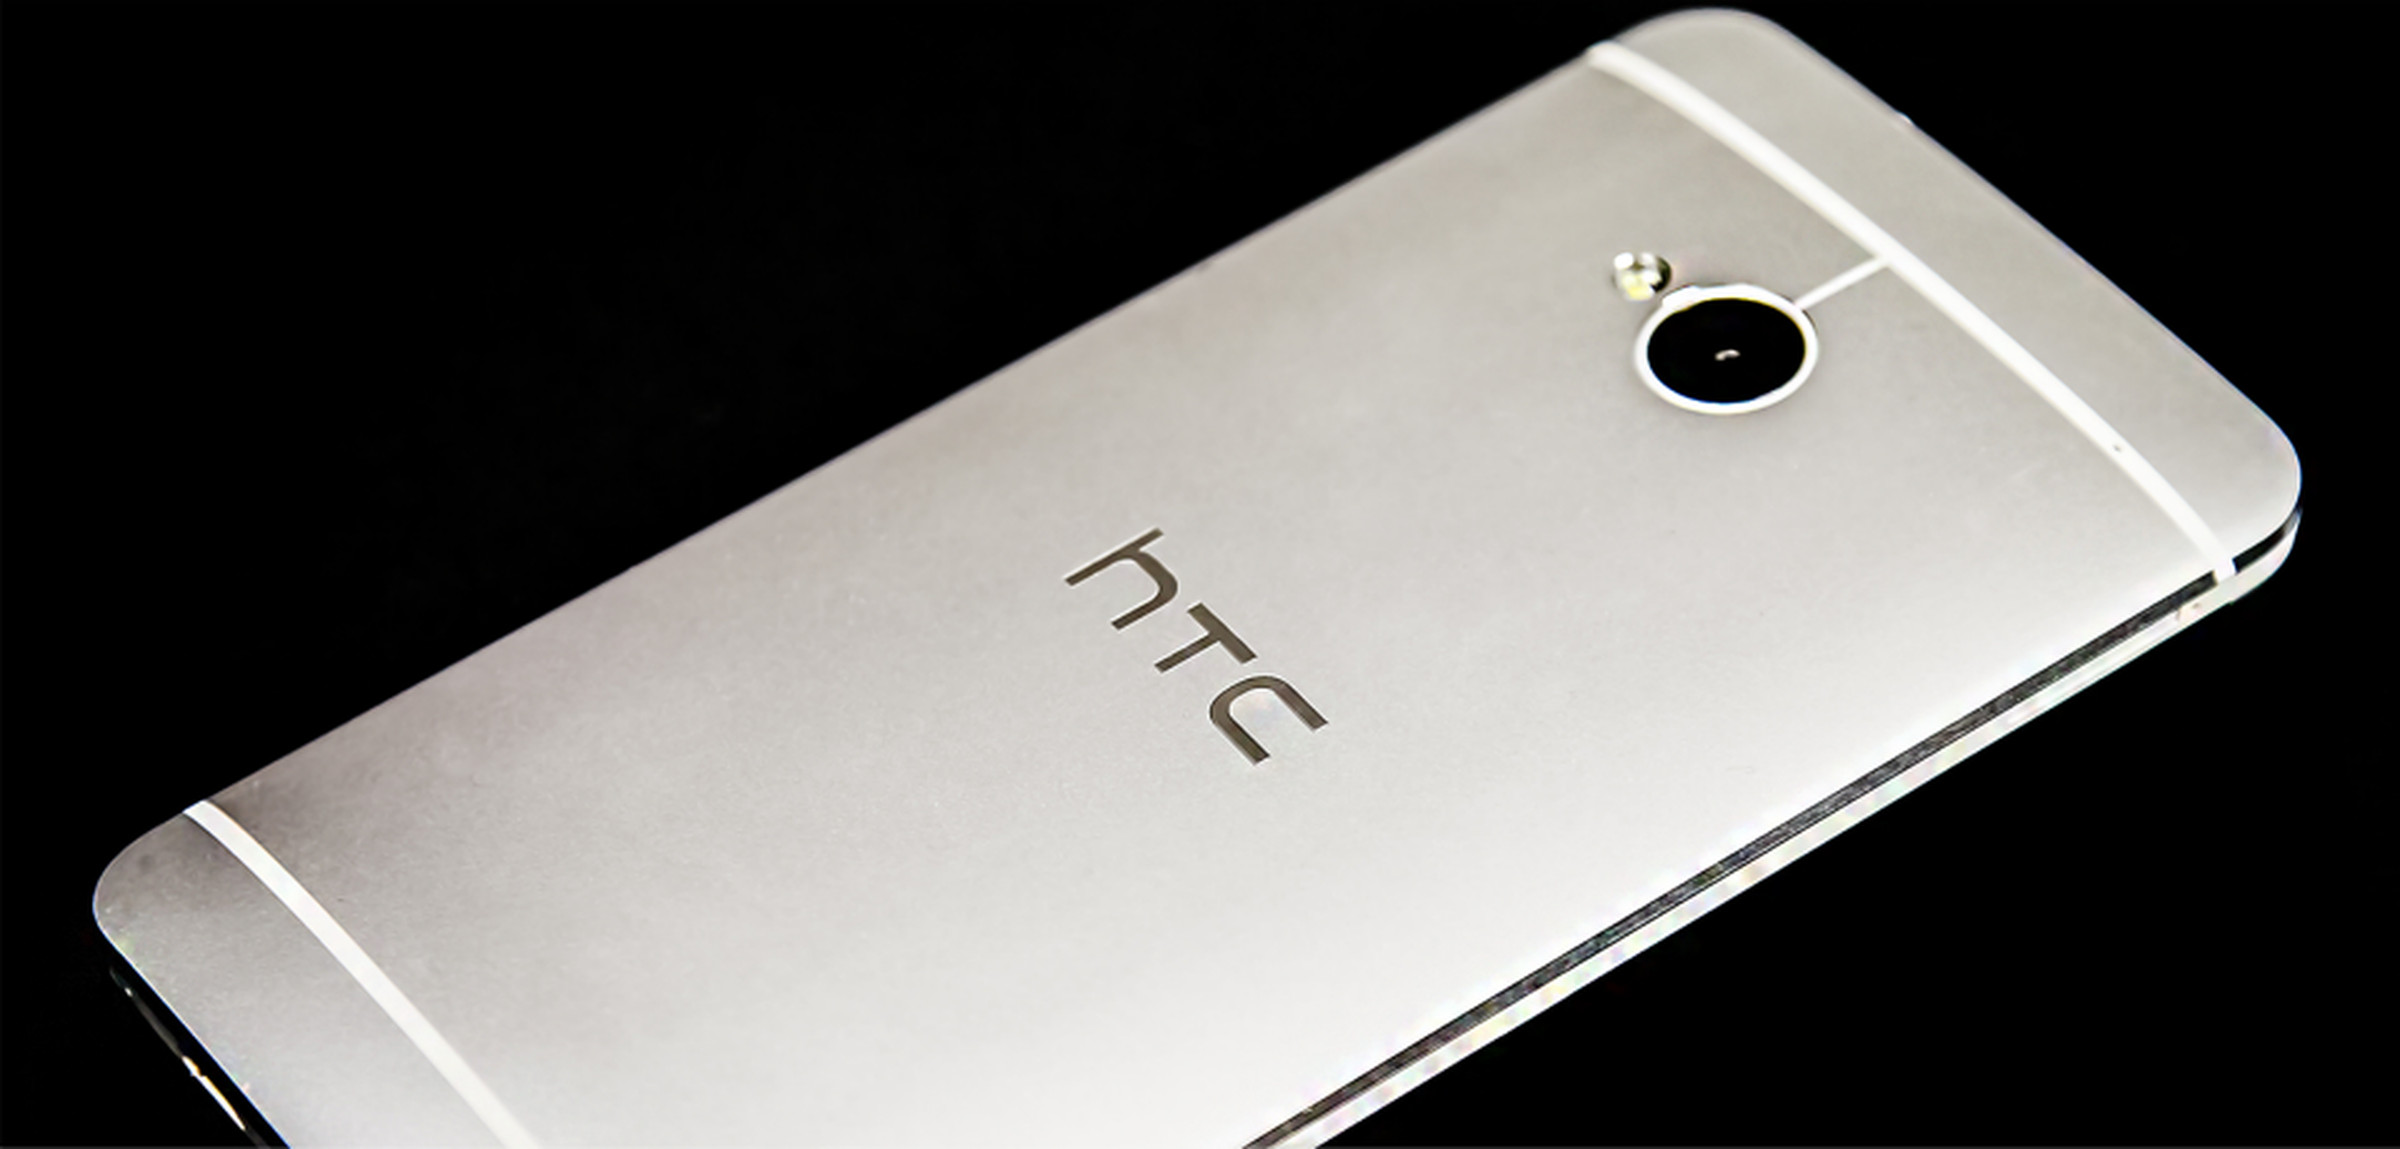 HTC One press photos